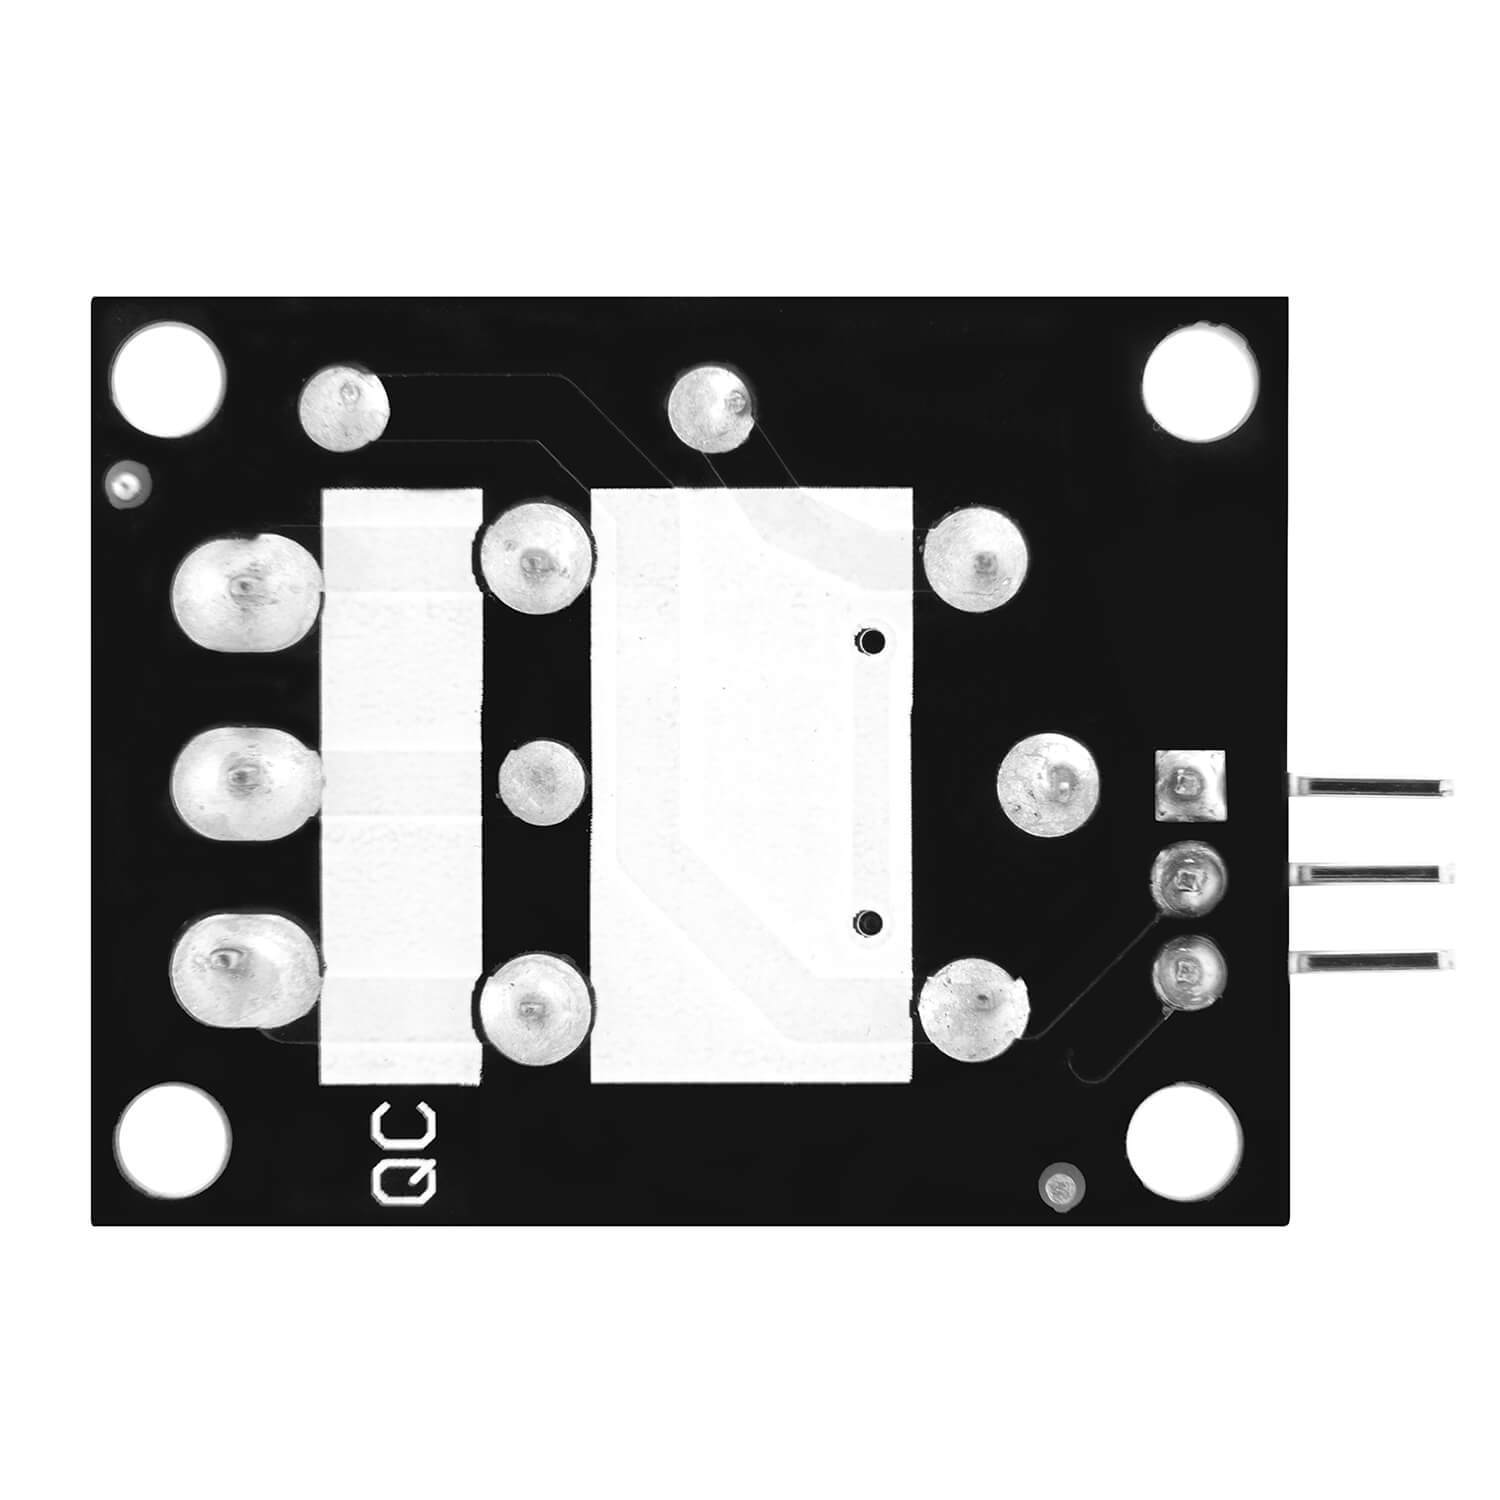 1-Relais 5V KY-019 Modul High-Level-Trigger kompatibel mit Arduino und Raspberry Pi